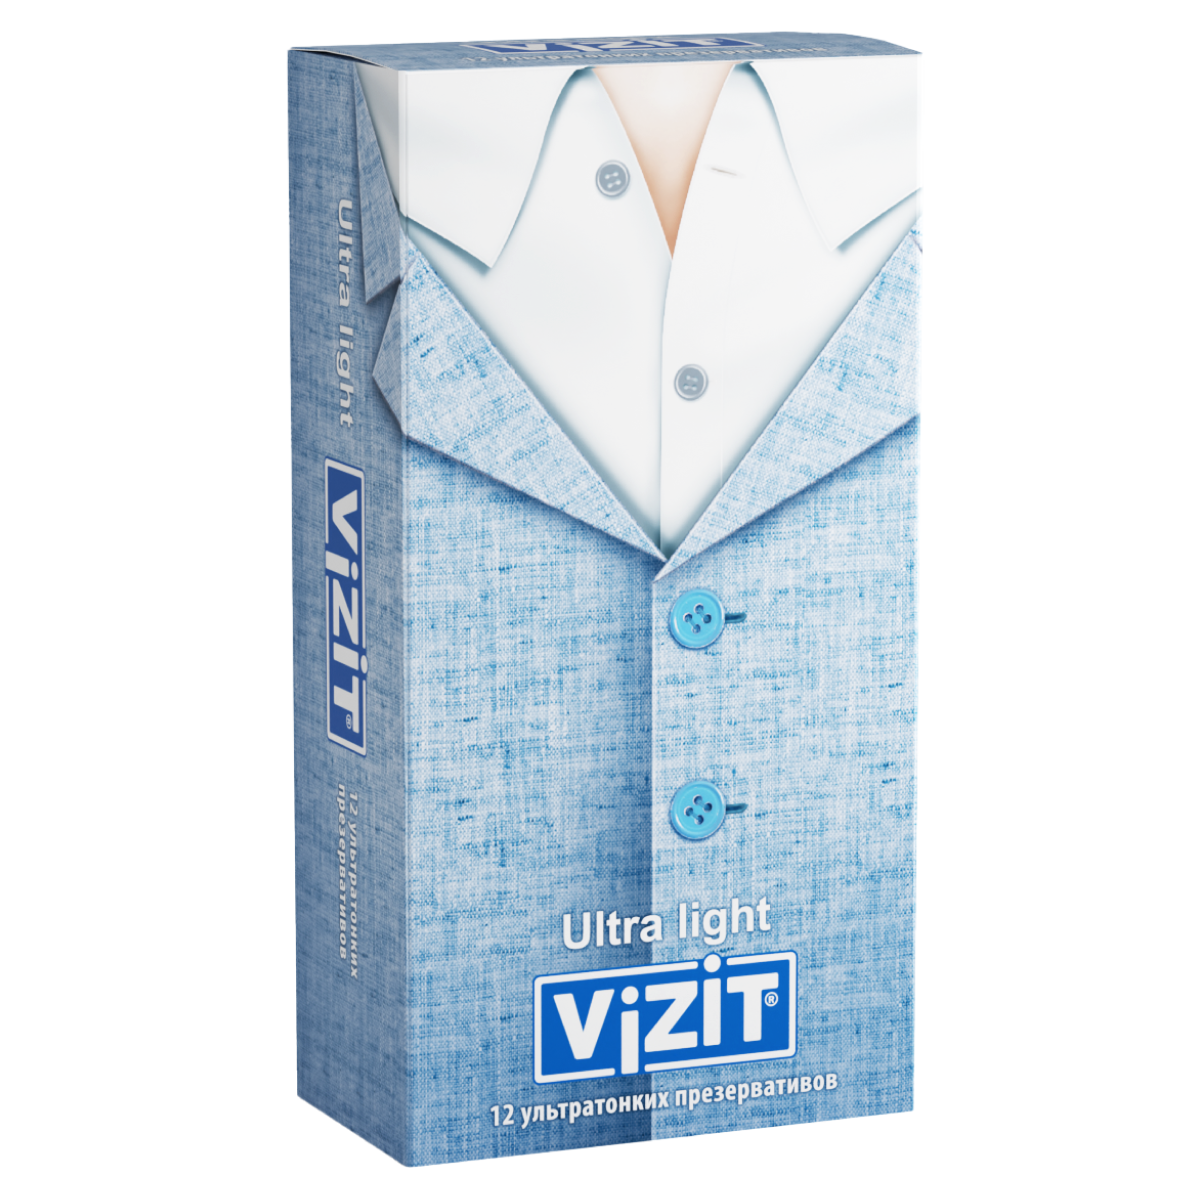 Купить Презервативы Vizit Ultra light 12 шт.